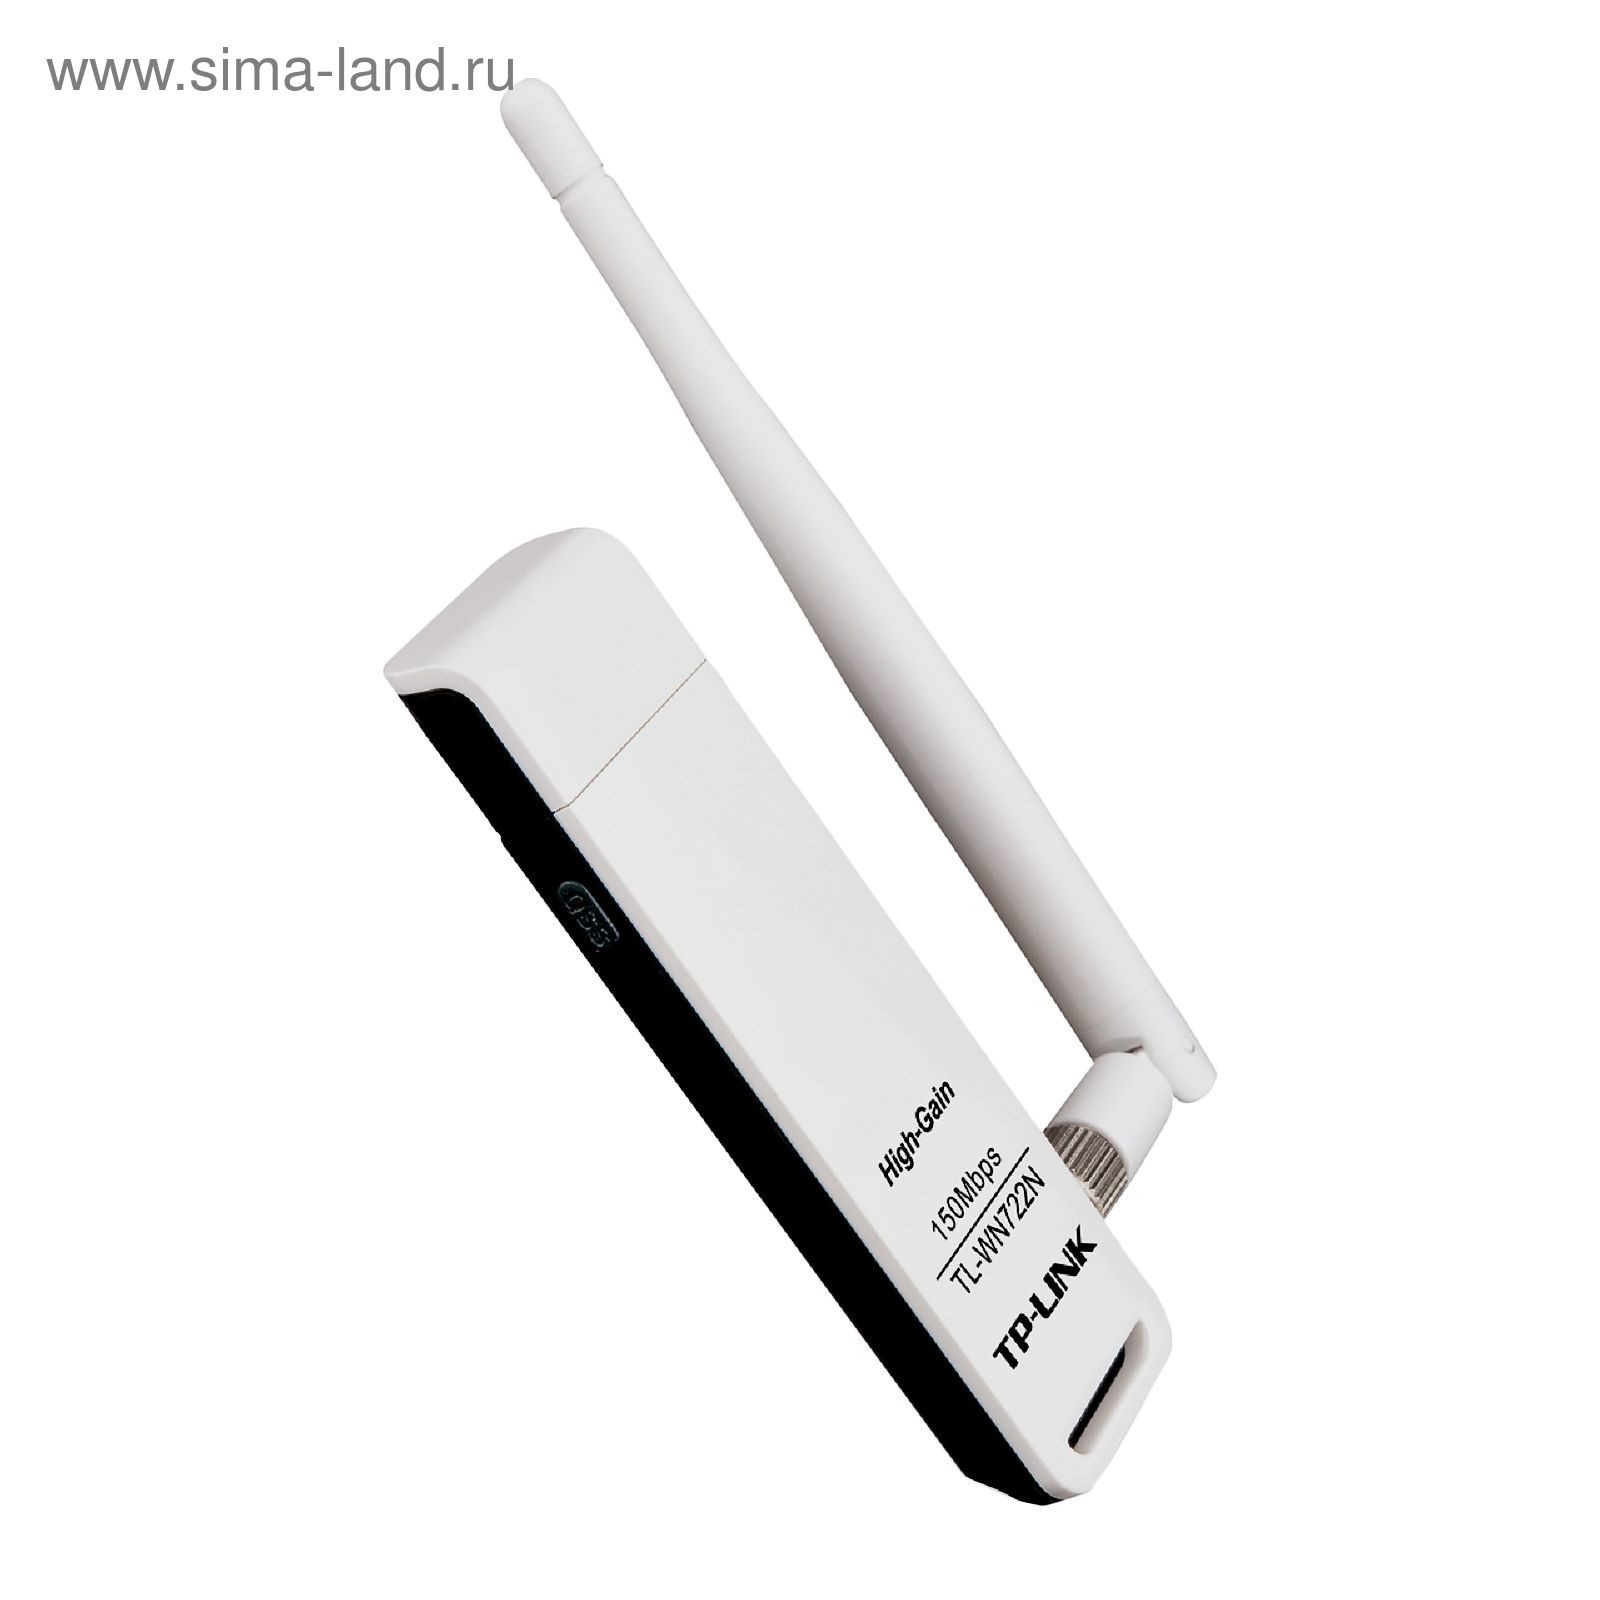 Сетевой адаптер -Fi TP-Link TL-WN722N USB 2.0 (1579229) - Купить по .